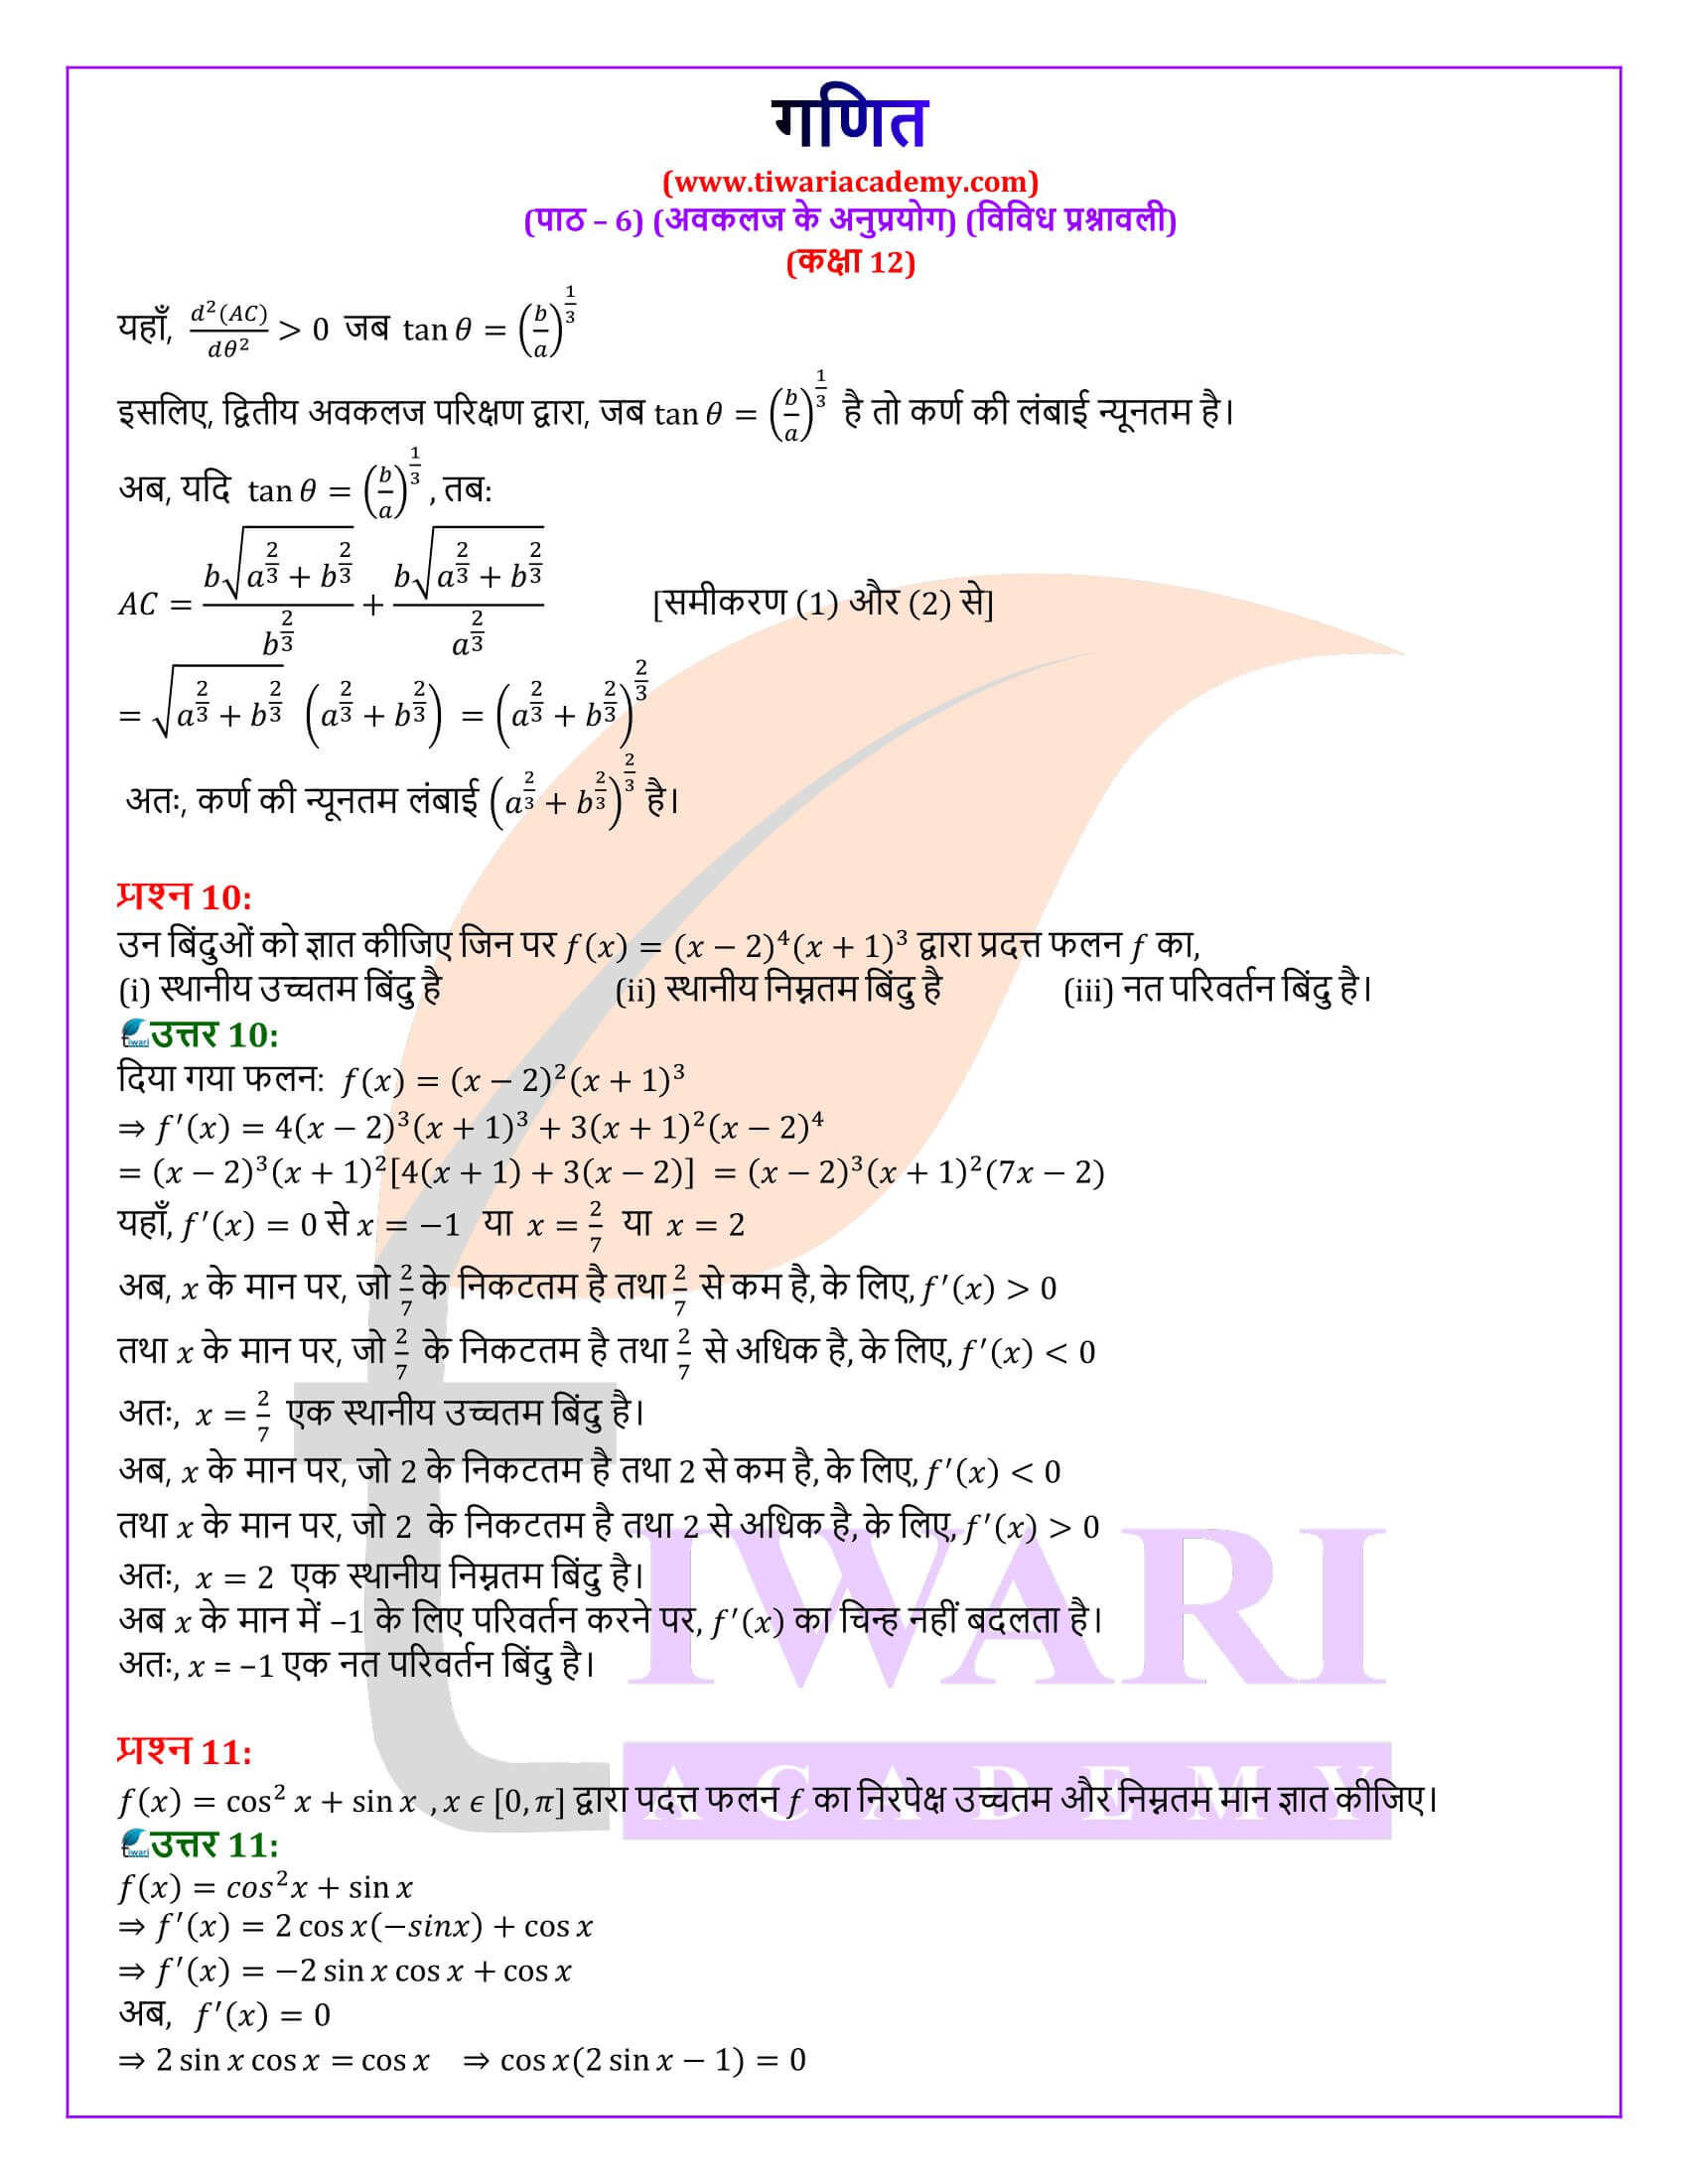 कक्षा 12 गणित अध्याय 6 विविध प्रश्नावली हिंदी मीडियम